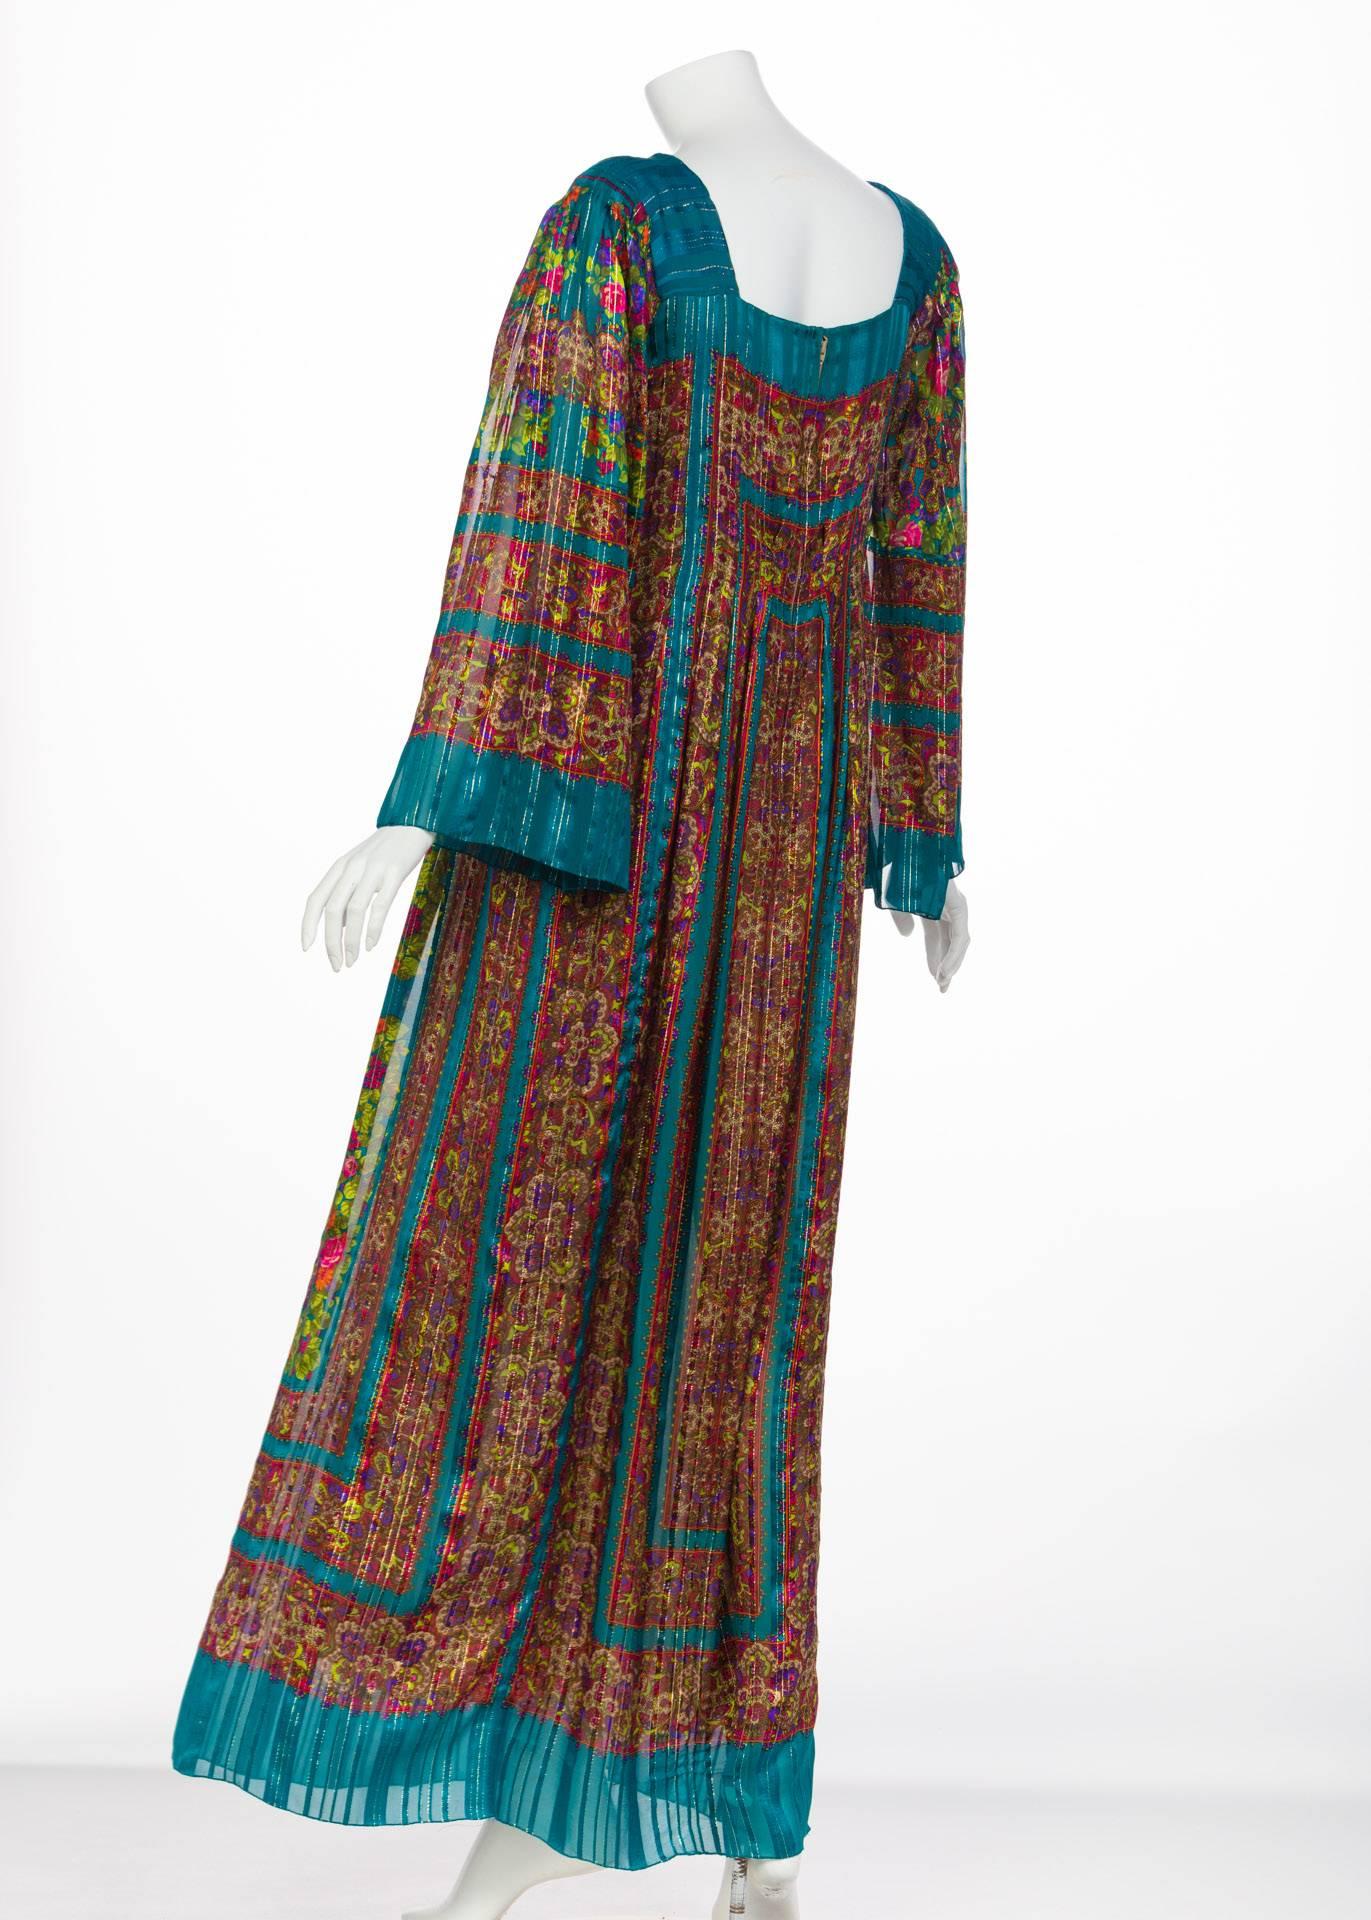 Black Pauline Trigere Silk Floral Metallic Bell Sleeve Caftan Maxi Dress, 1970s For Sale